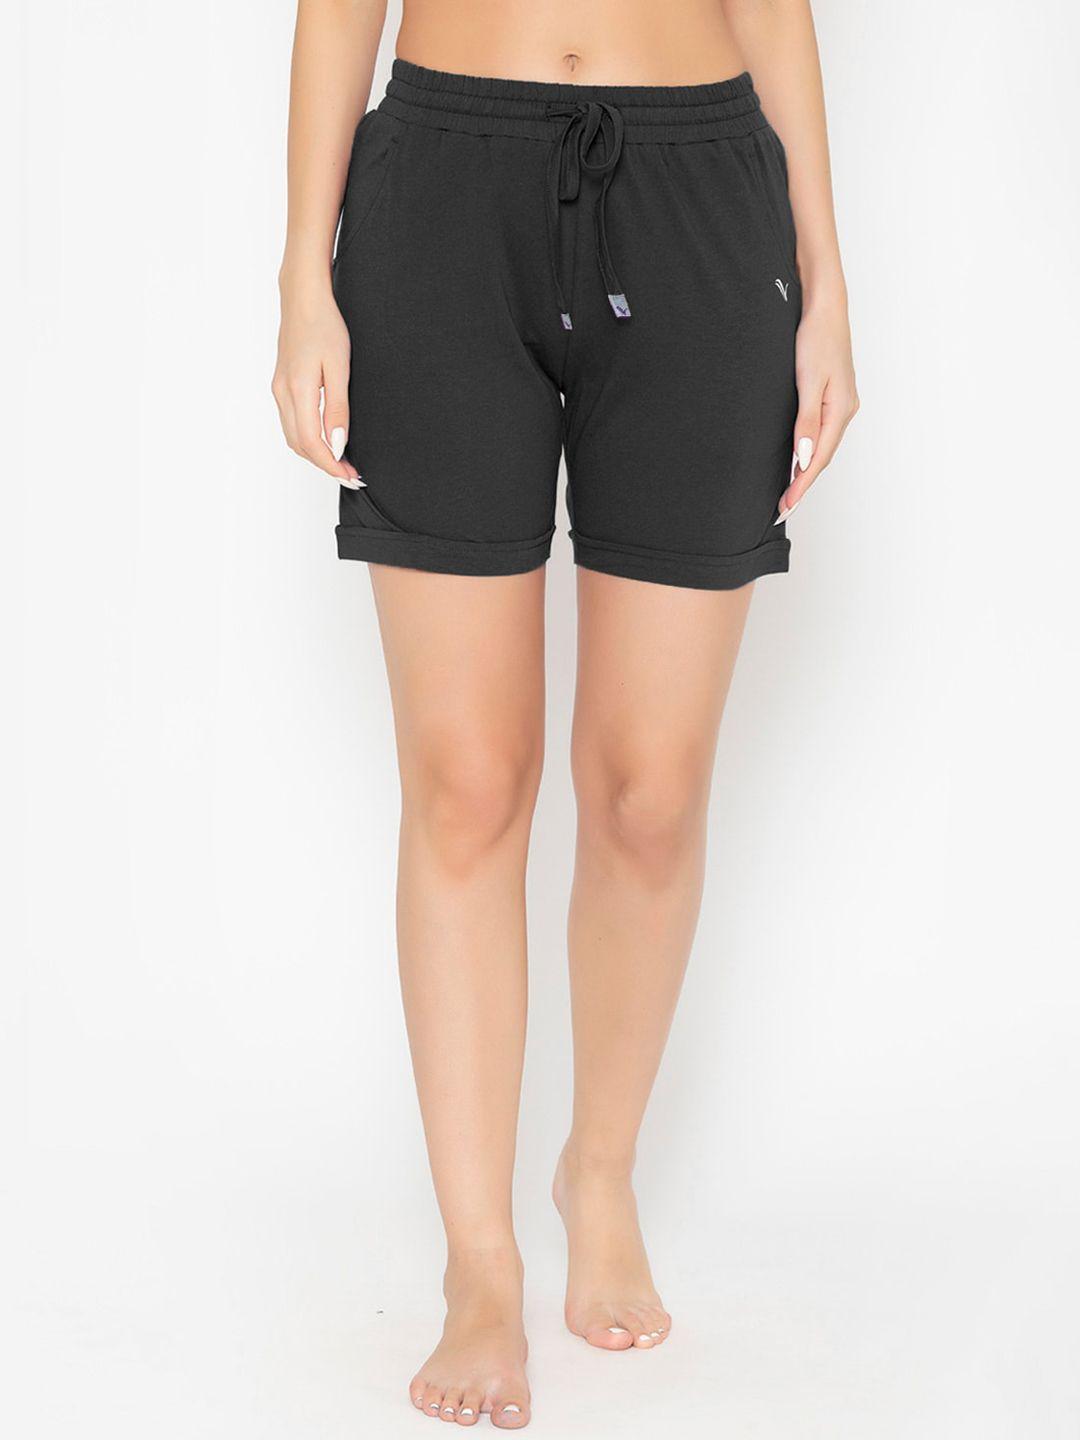 vami women black solid plain cotton shorts